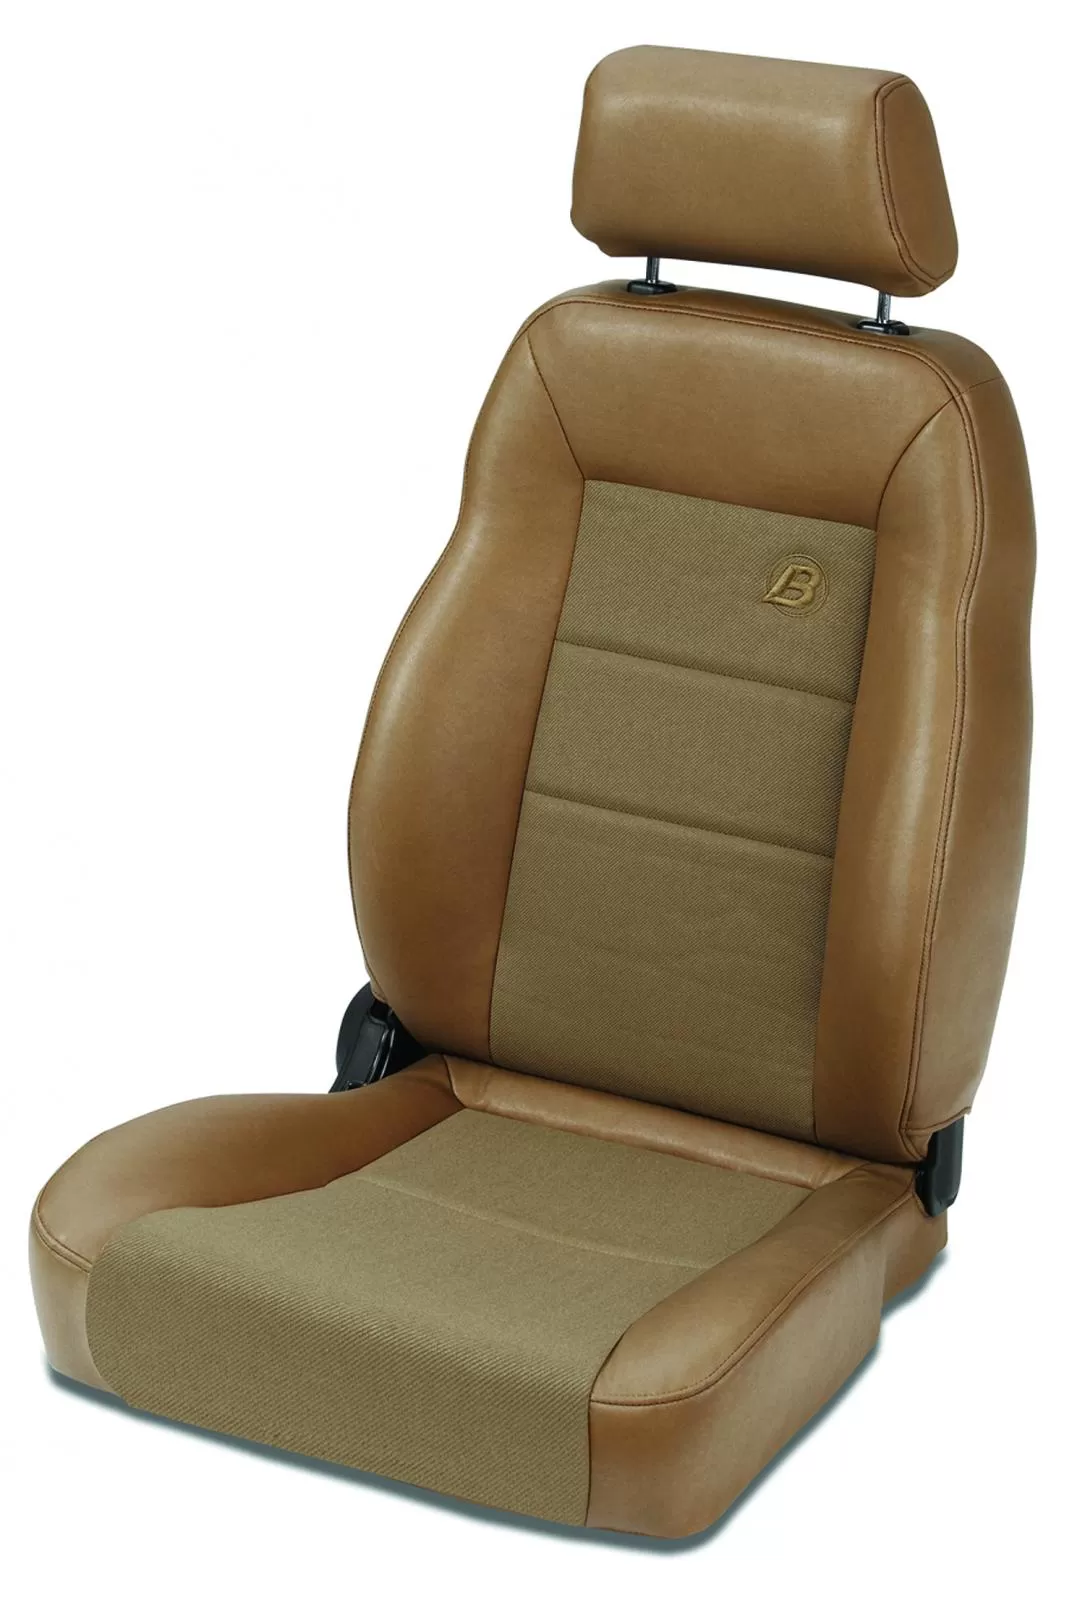 Bestop Fabric Spice Front Passenger Side Trailmax II Pro Front Seat Jeep CJ-7 | Wrangler YJ 1976-2006 - 39460-37